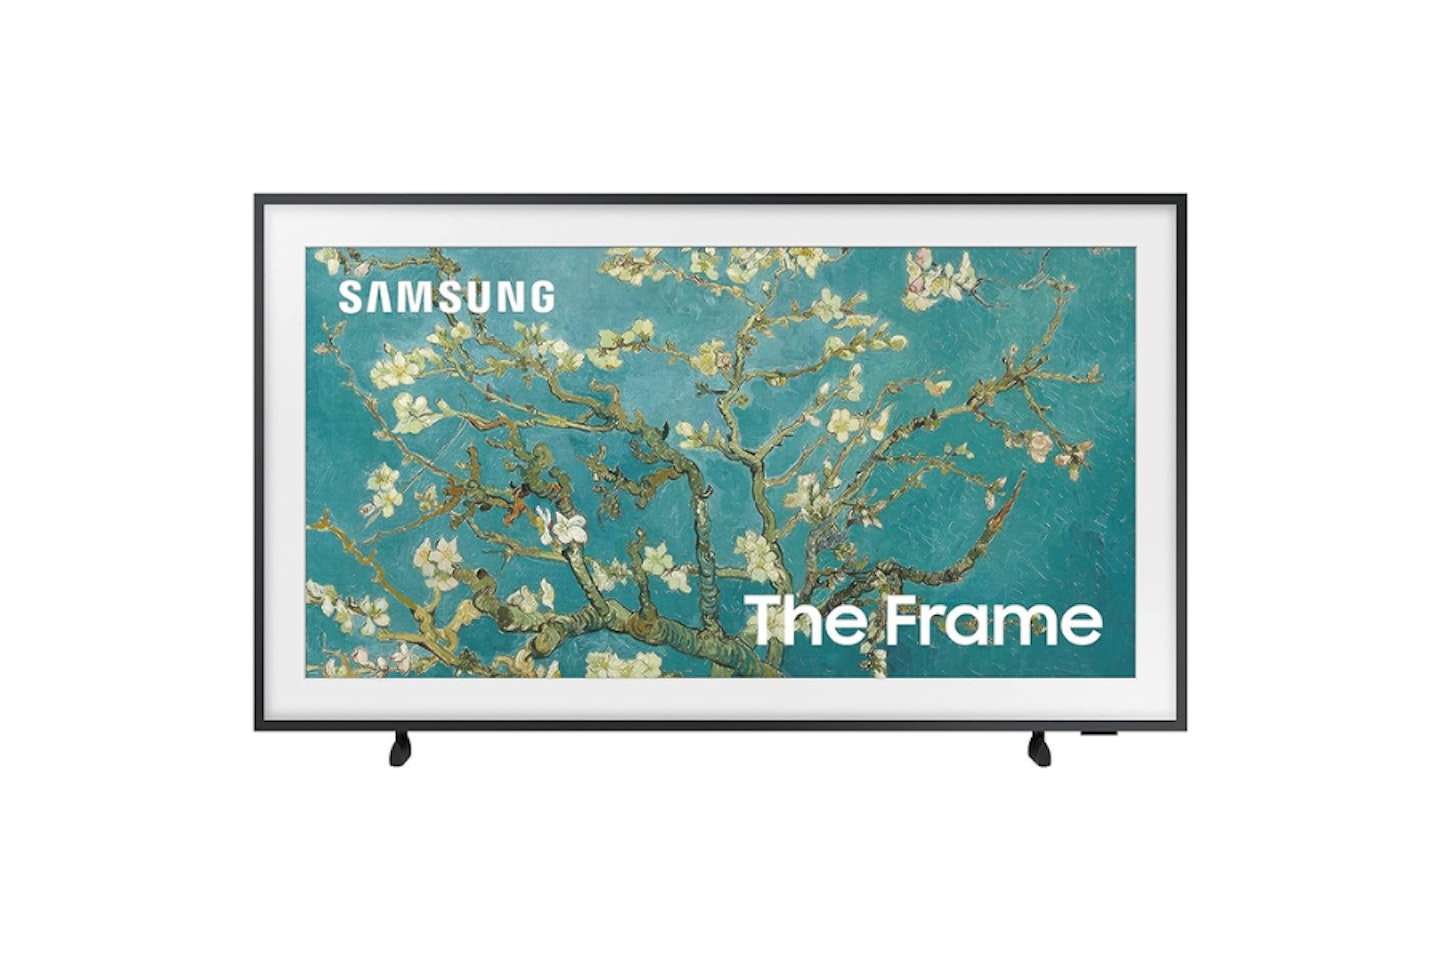 Samsung 43-inch Frame TV